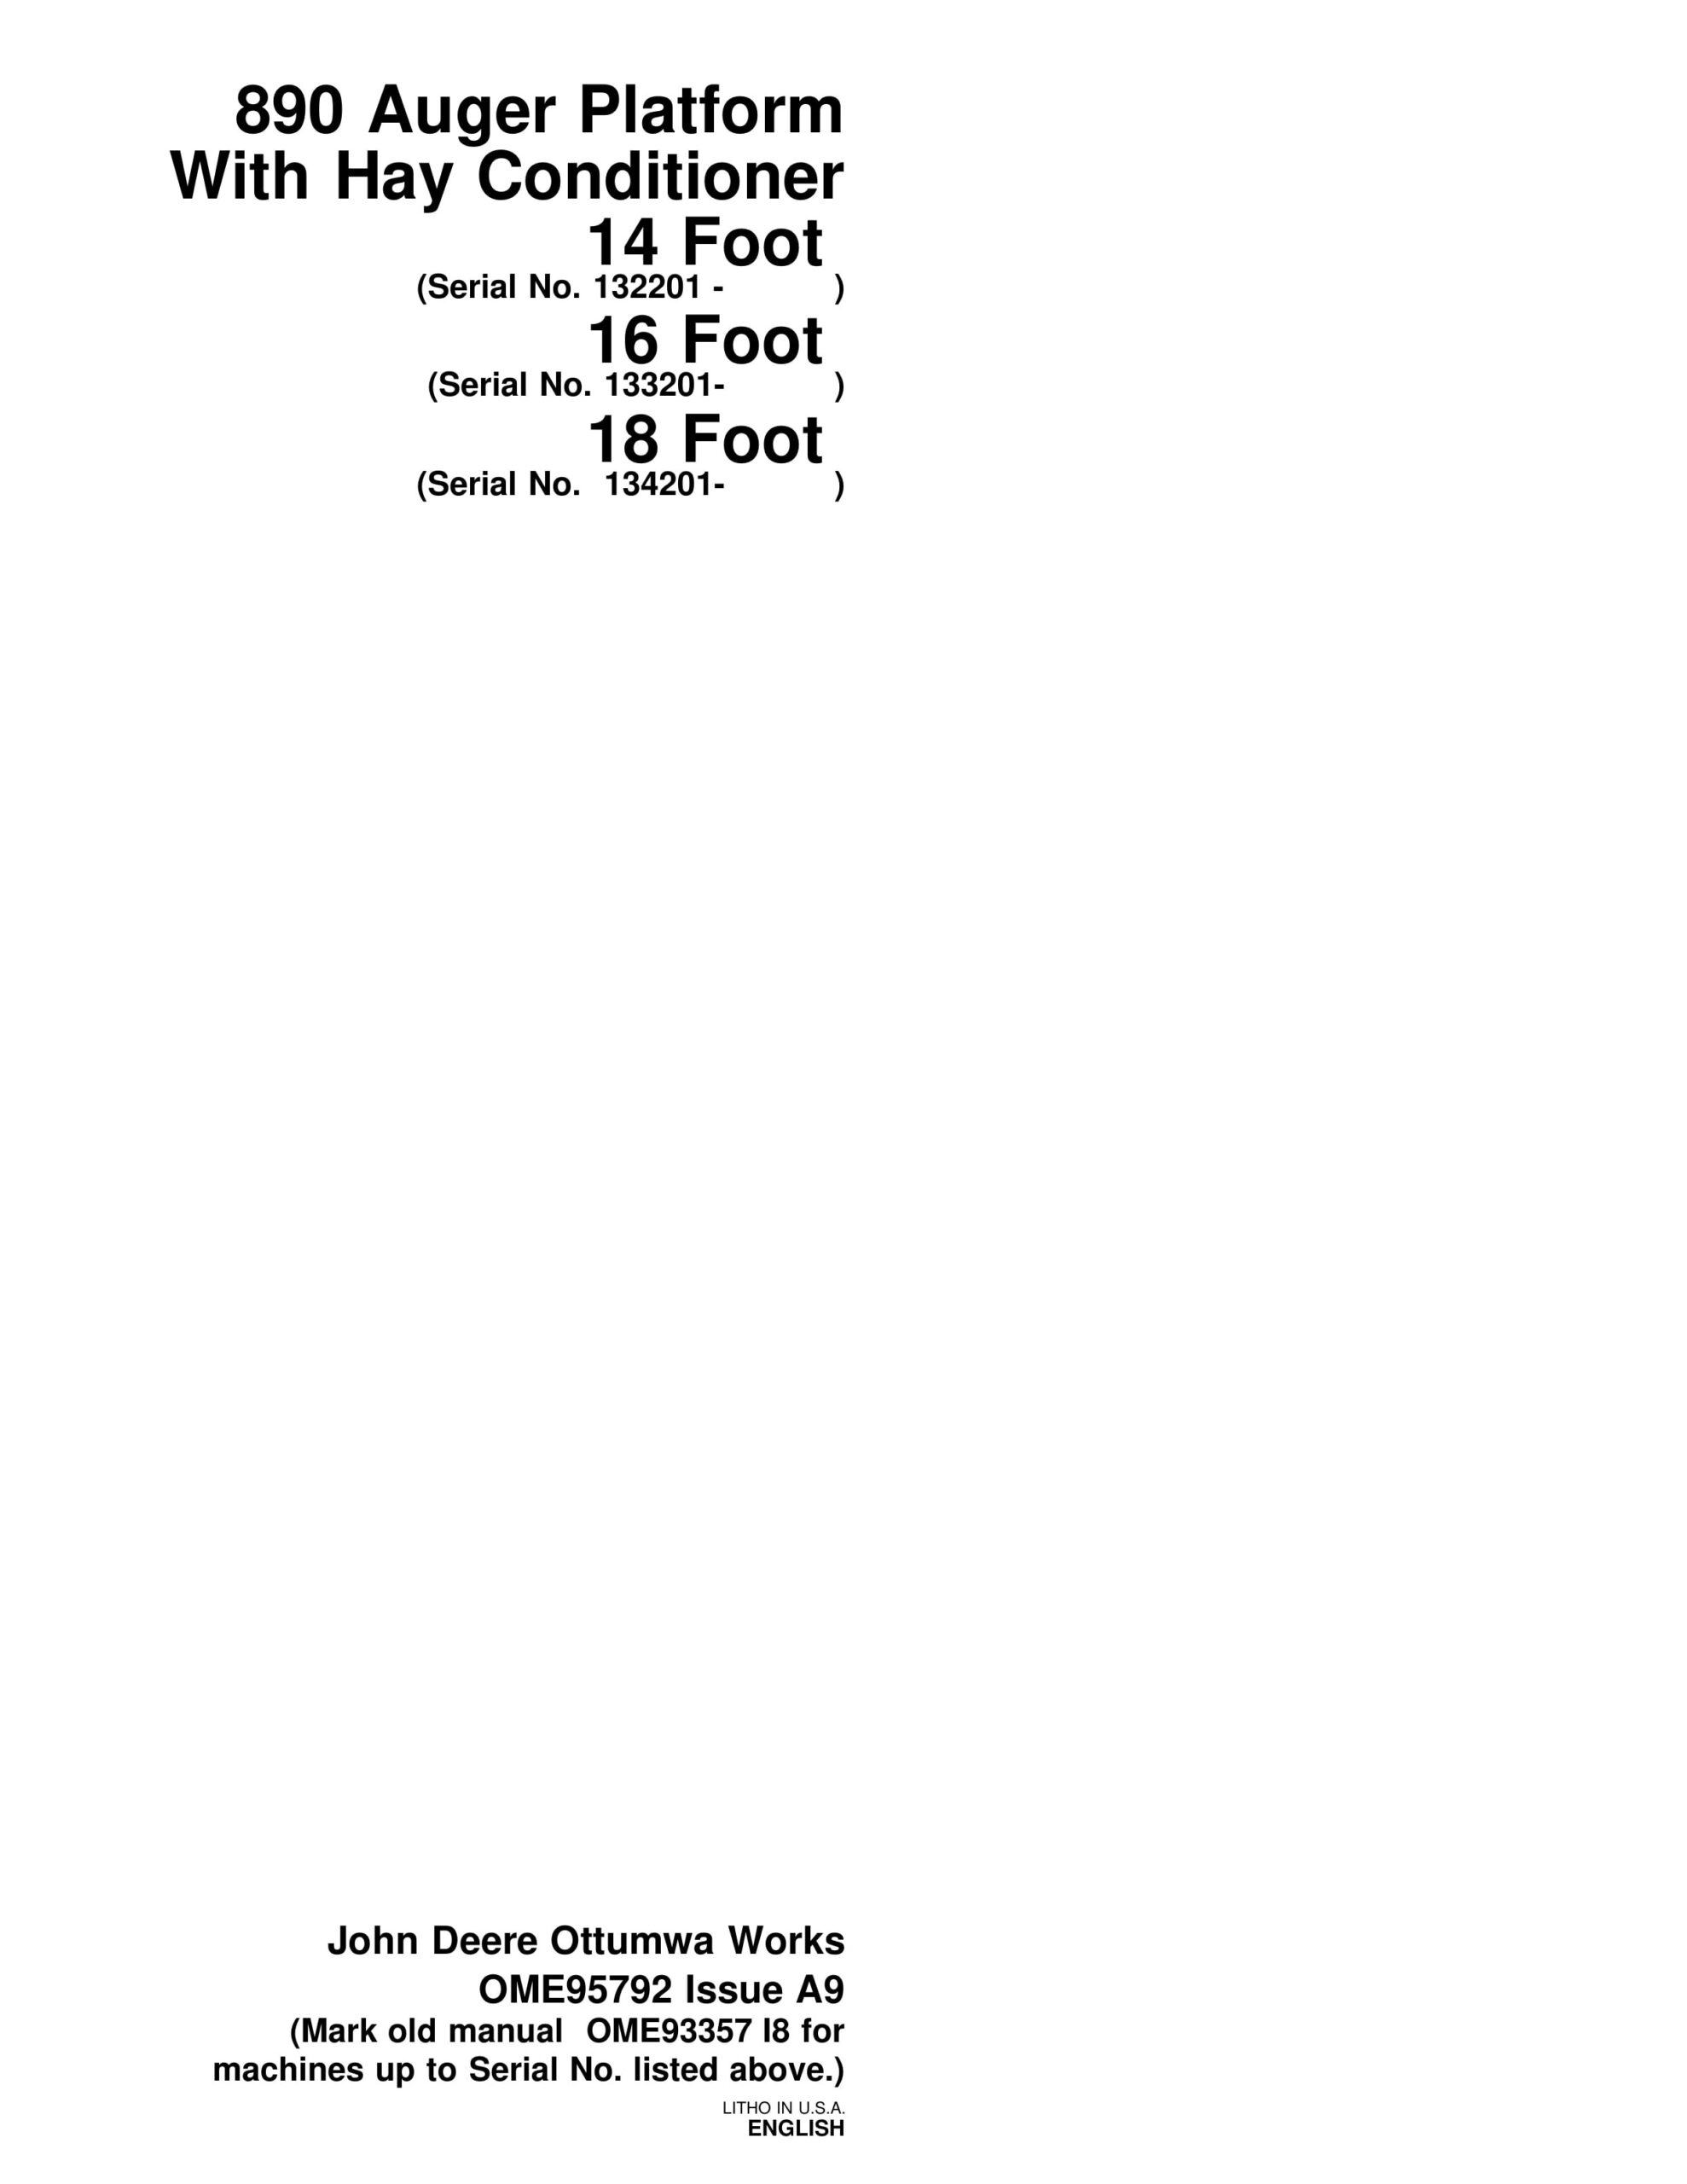 John Deere Hay Conditioner 14 Foot 16 Foot 18 Foot With 890 Auger Platform Operator Manual OME95792-1